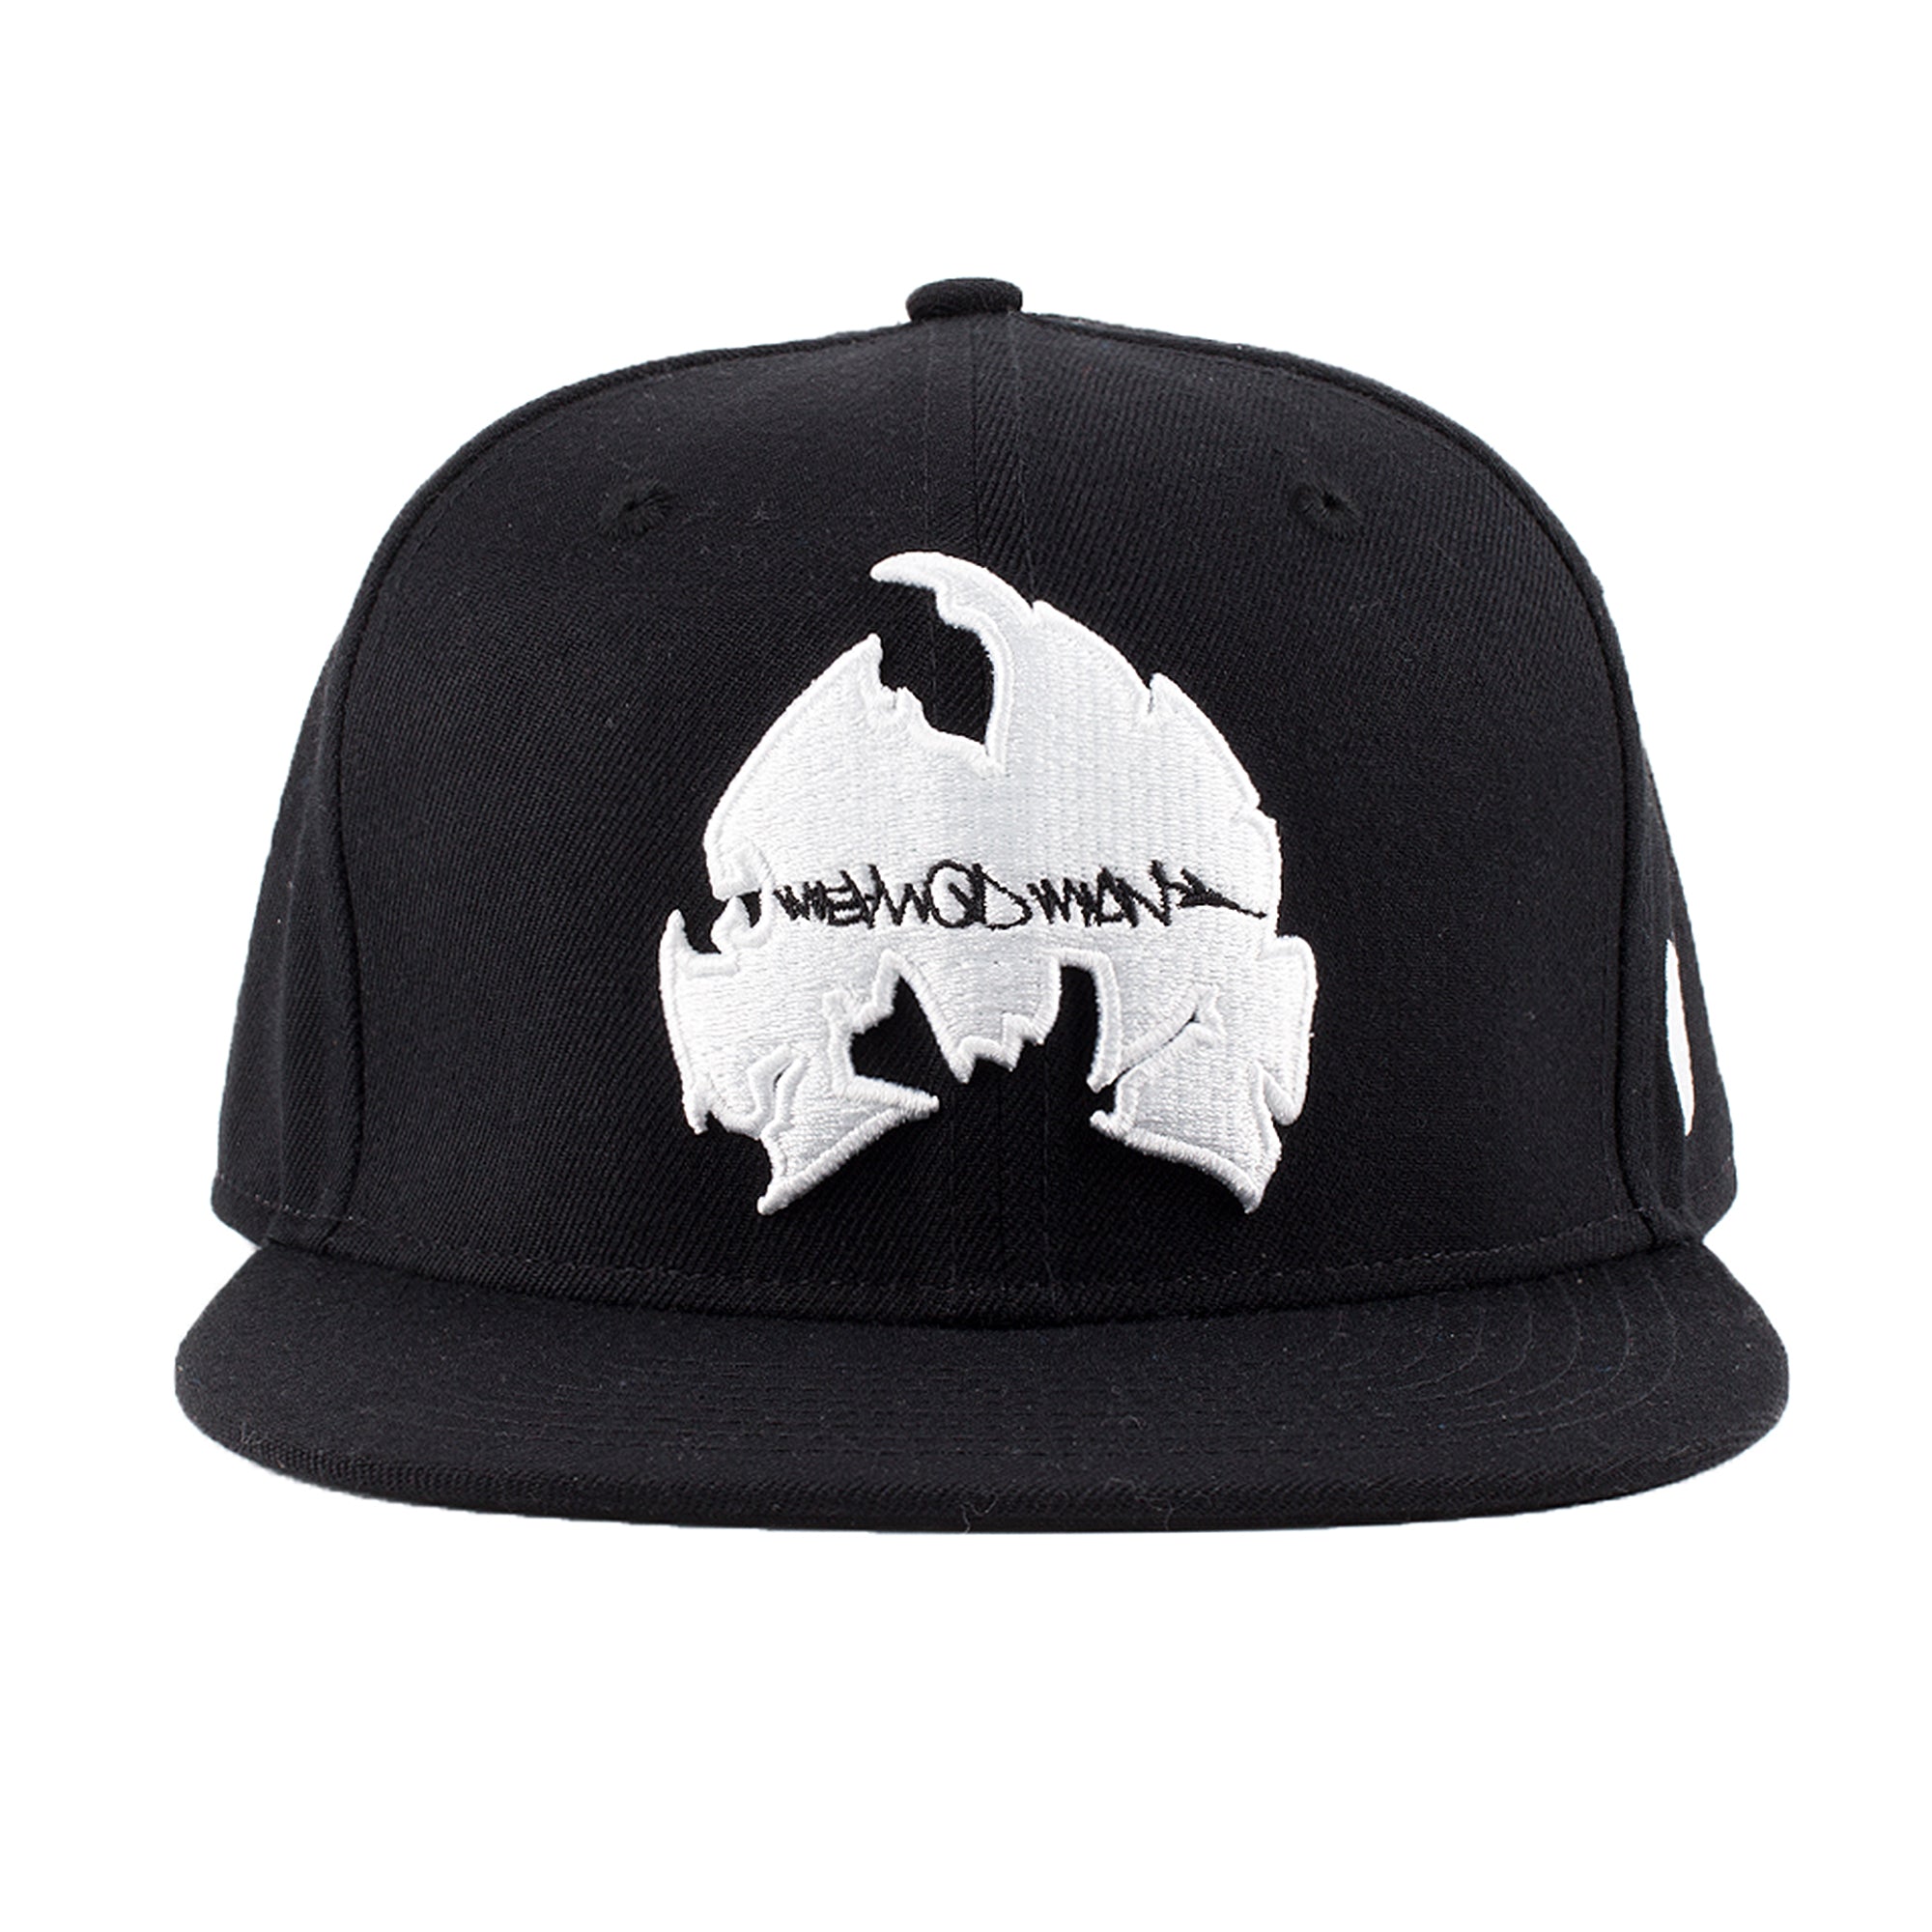 Wu Wear - Method Man Snapback Cap - Wu-Tang Clan